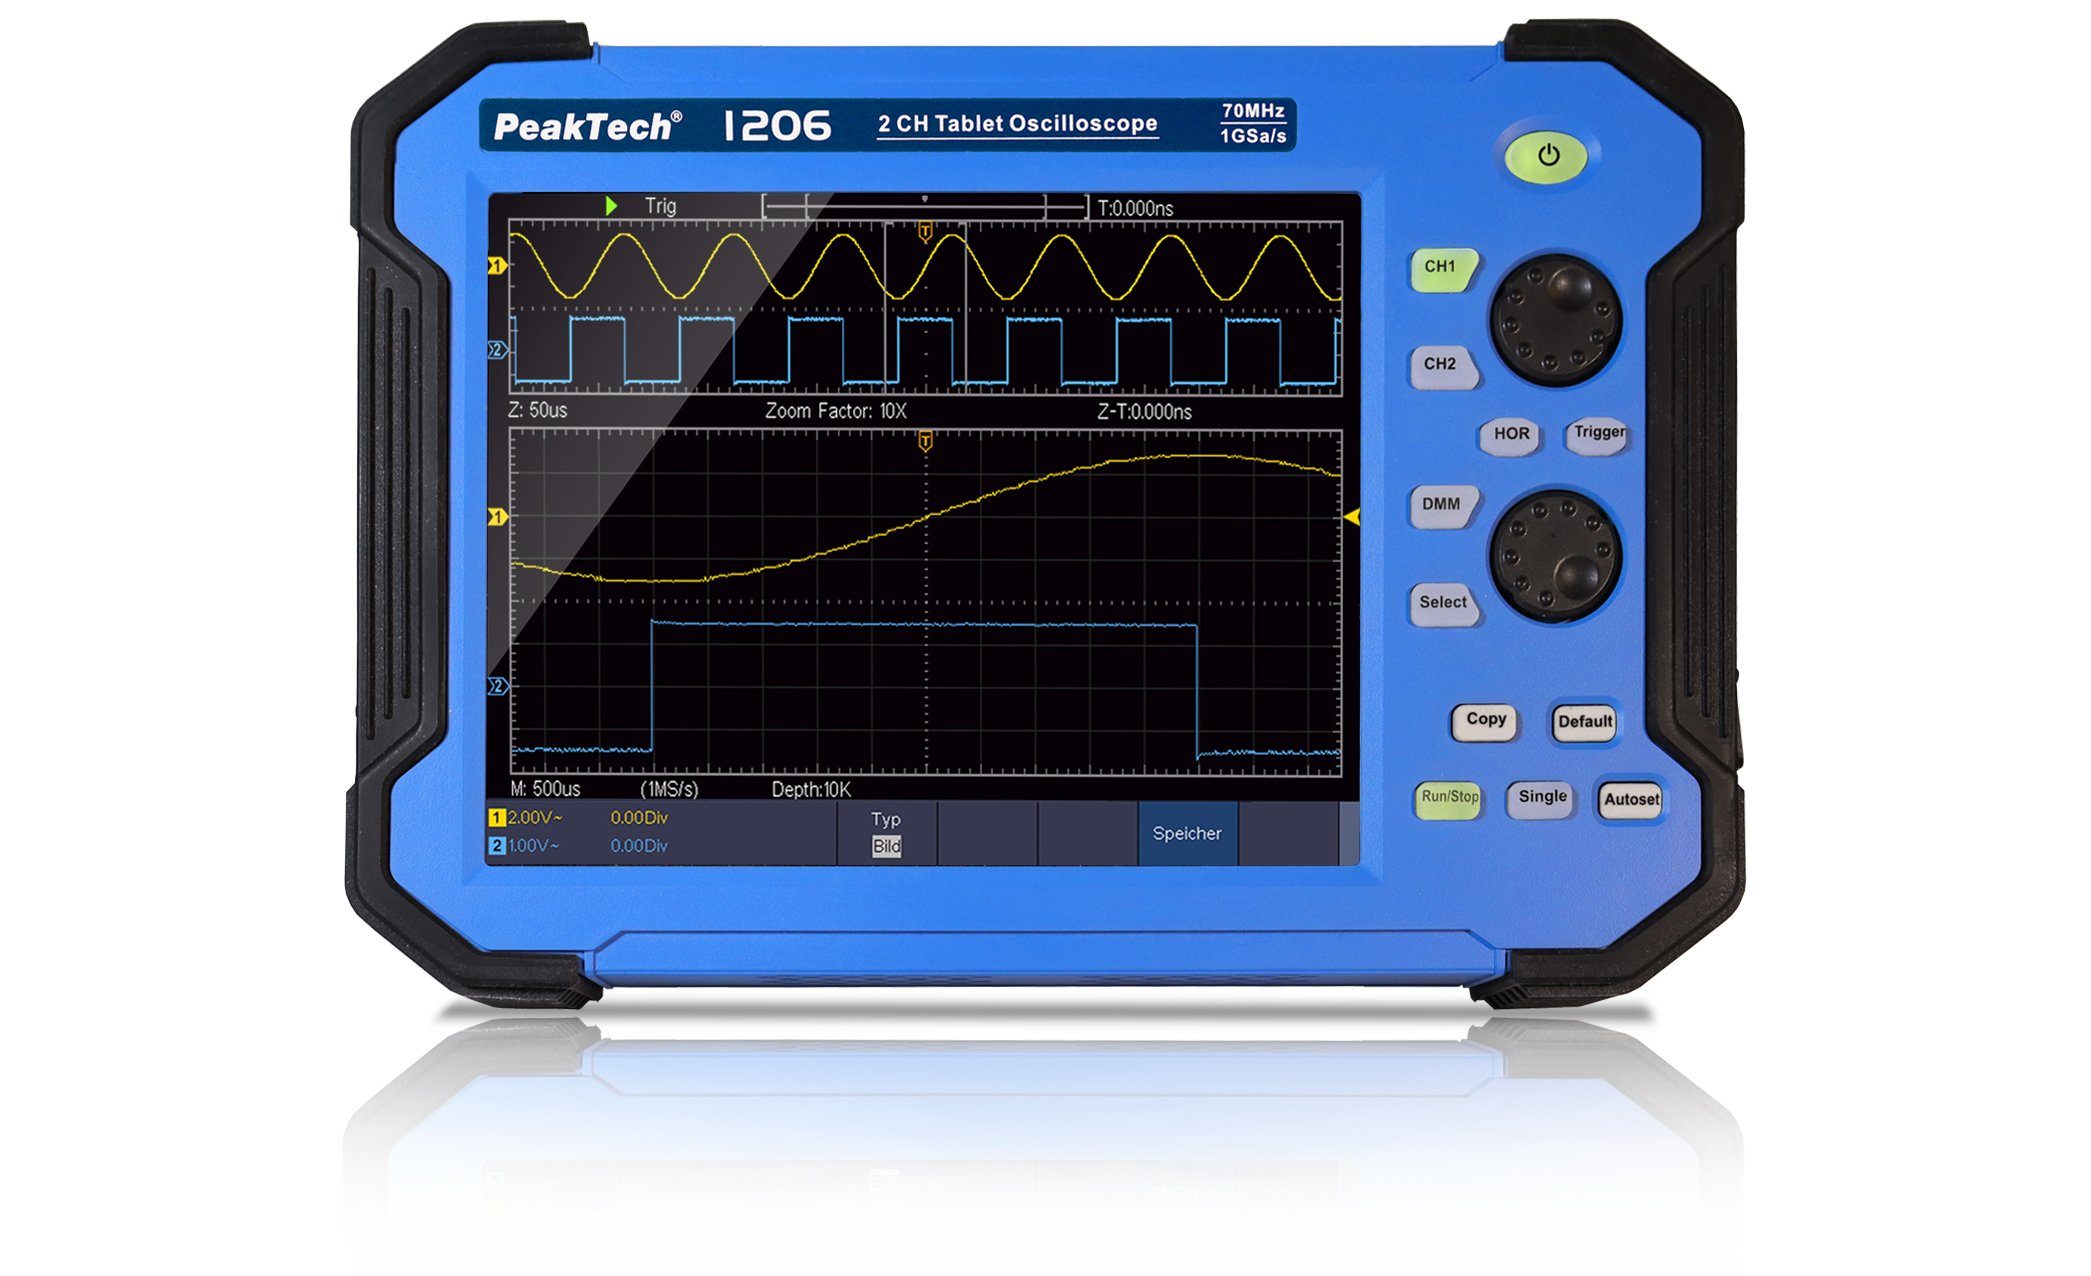 PeakTech Spannungsprüfer PeakTech 1206: 70 MHz / 2 CH, 1 GS/s Tablet Touchscreen Oszilloskop